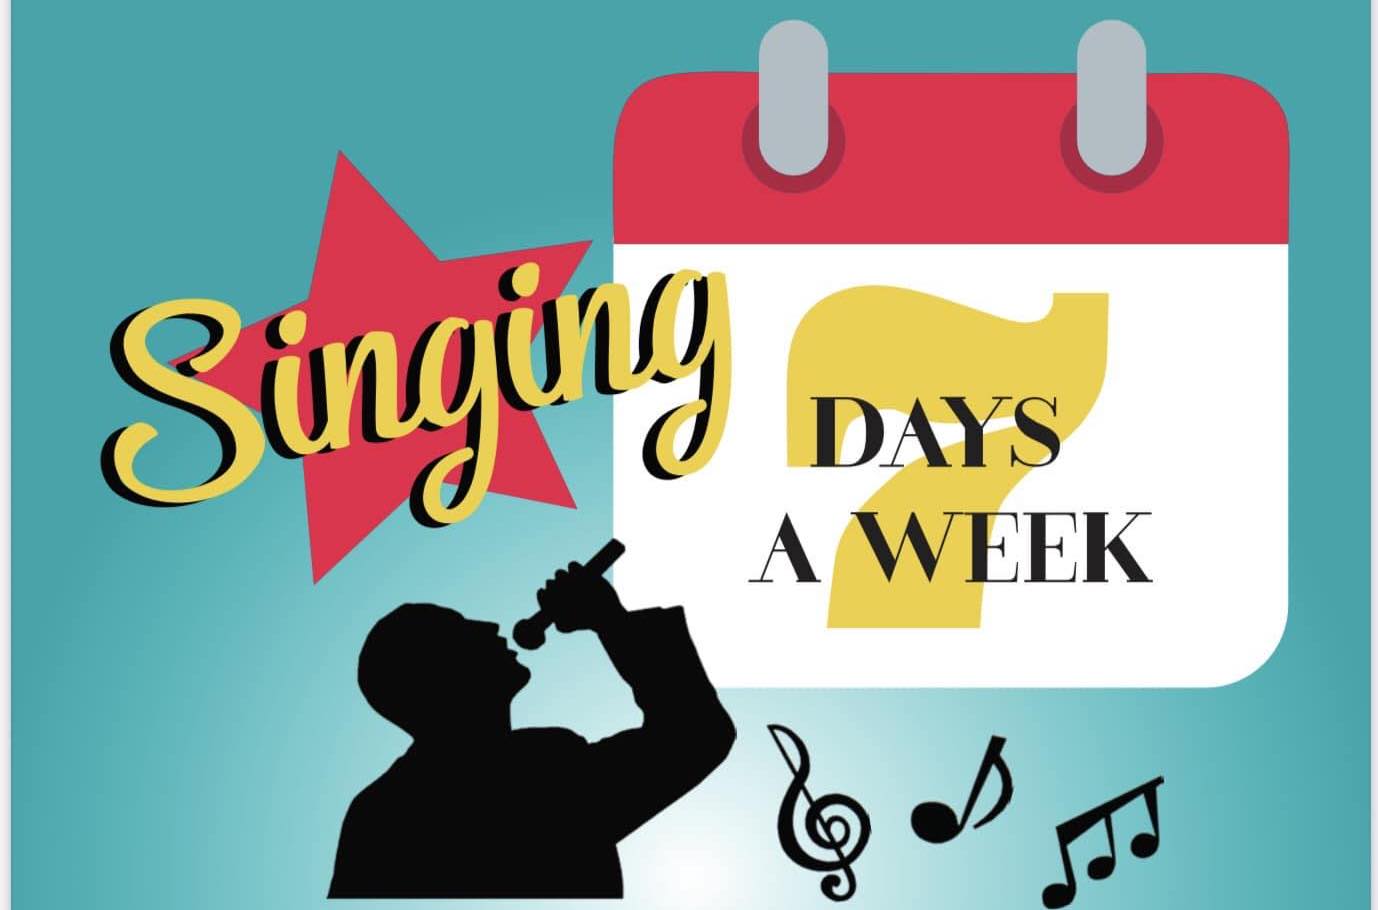 Singing 7 Days a Week